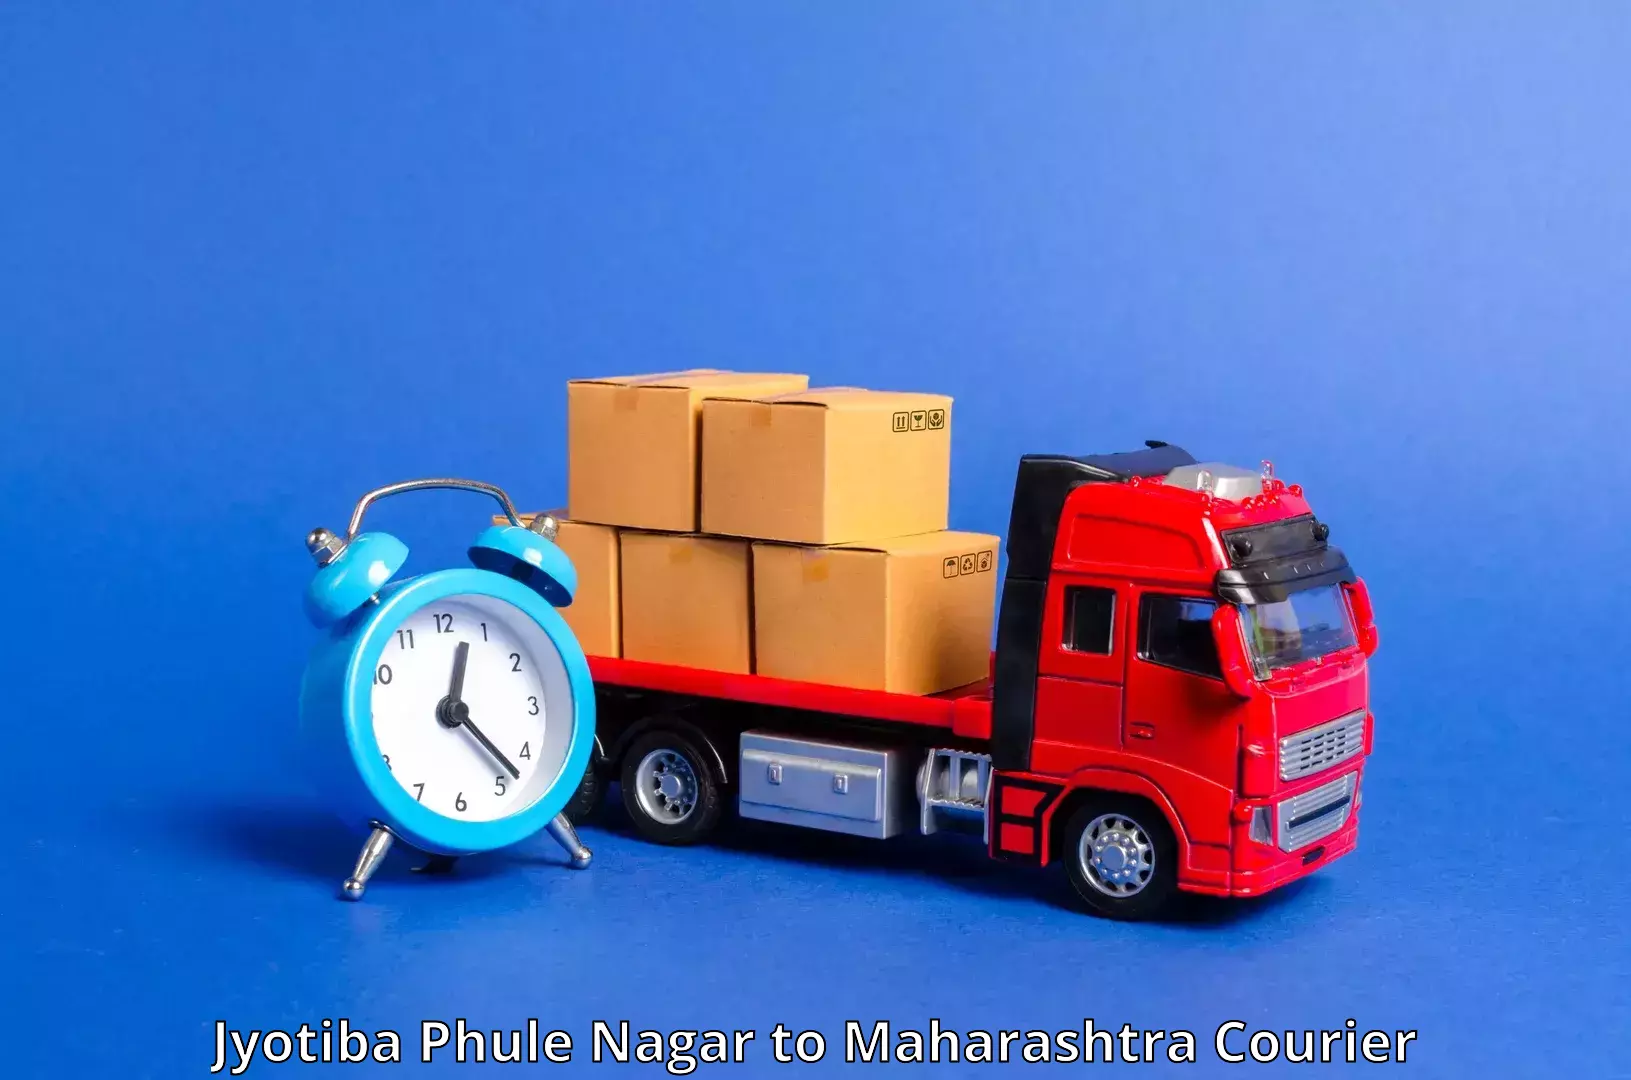 End-to-end delivery Jyotiba Phule Nagar to Pimpri Chinchwad